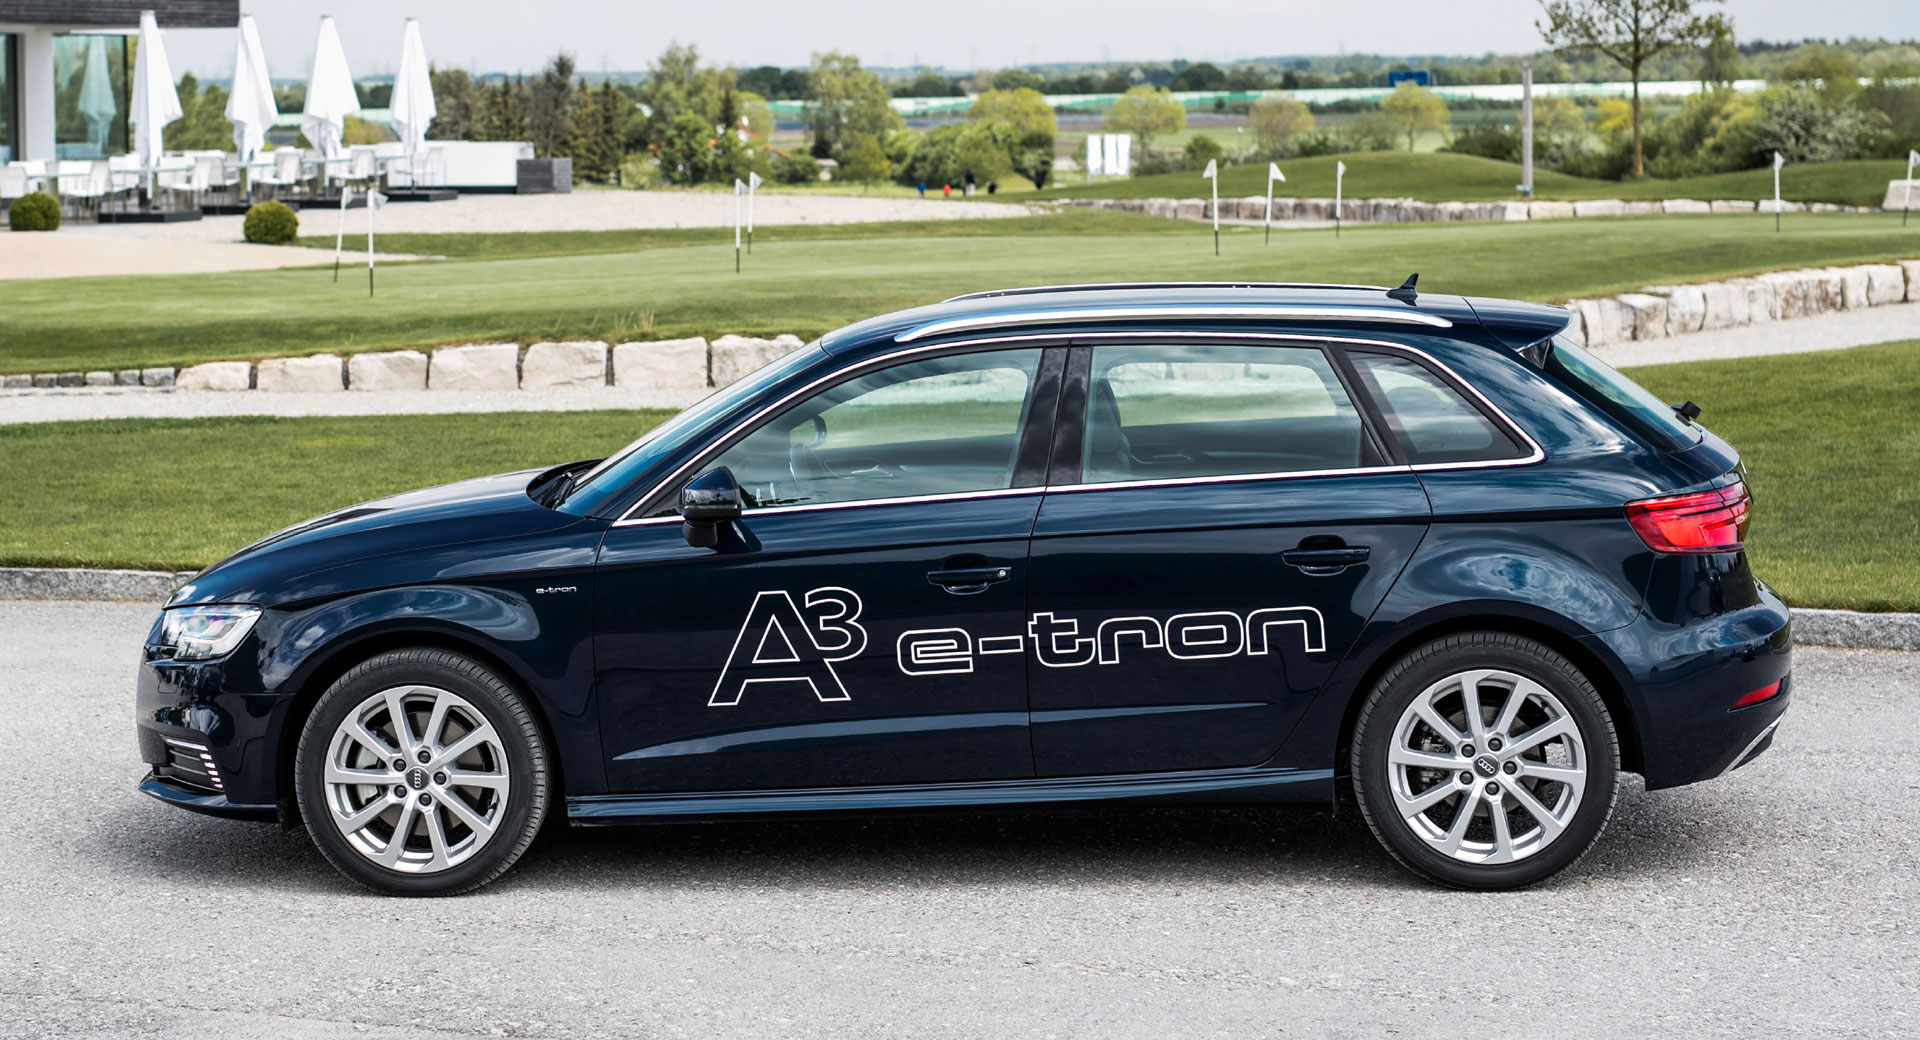 formeel graven Uitdrukkelijk Audi's A3 E-Tron Isn't 'Green' Enough By The New European Standards |  Carscoops